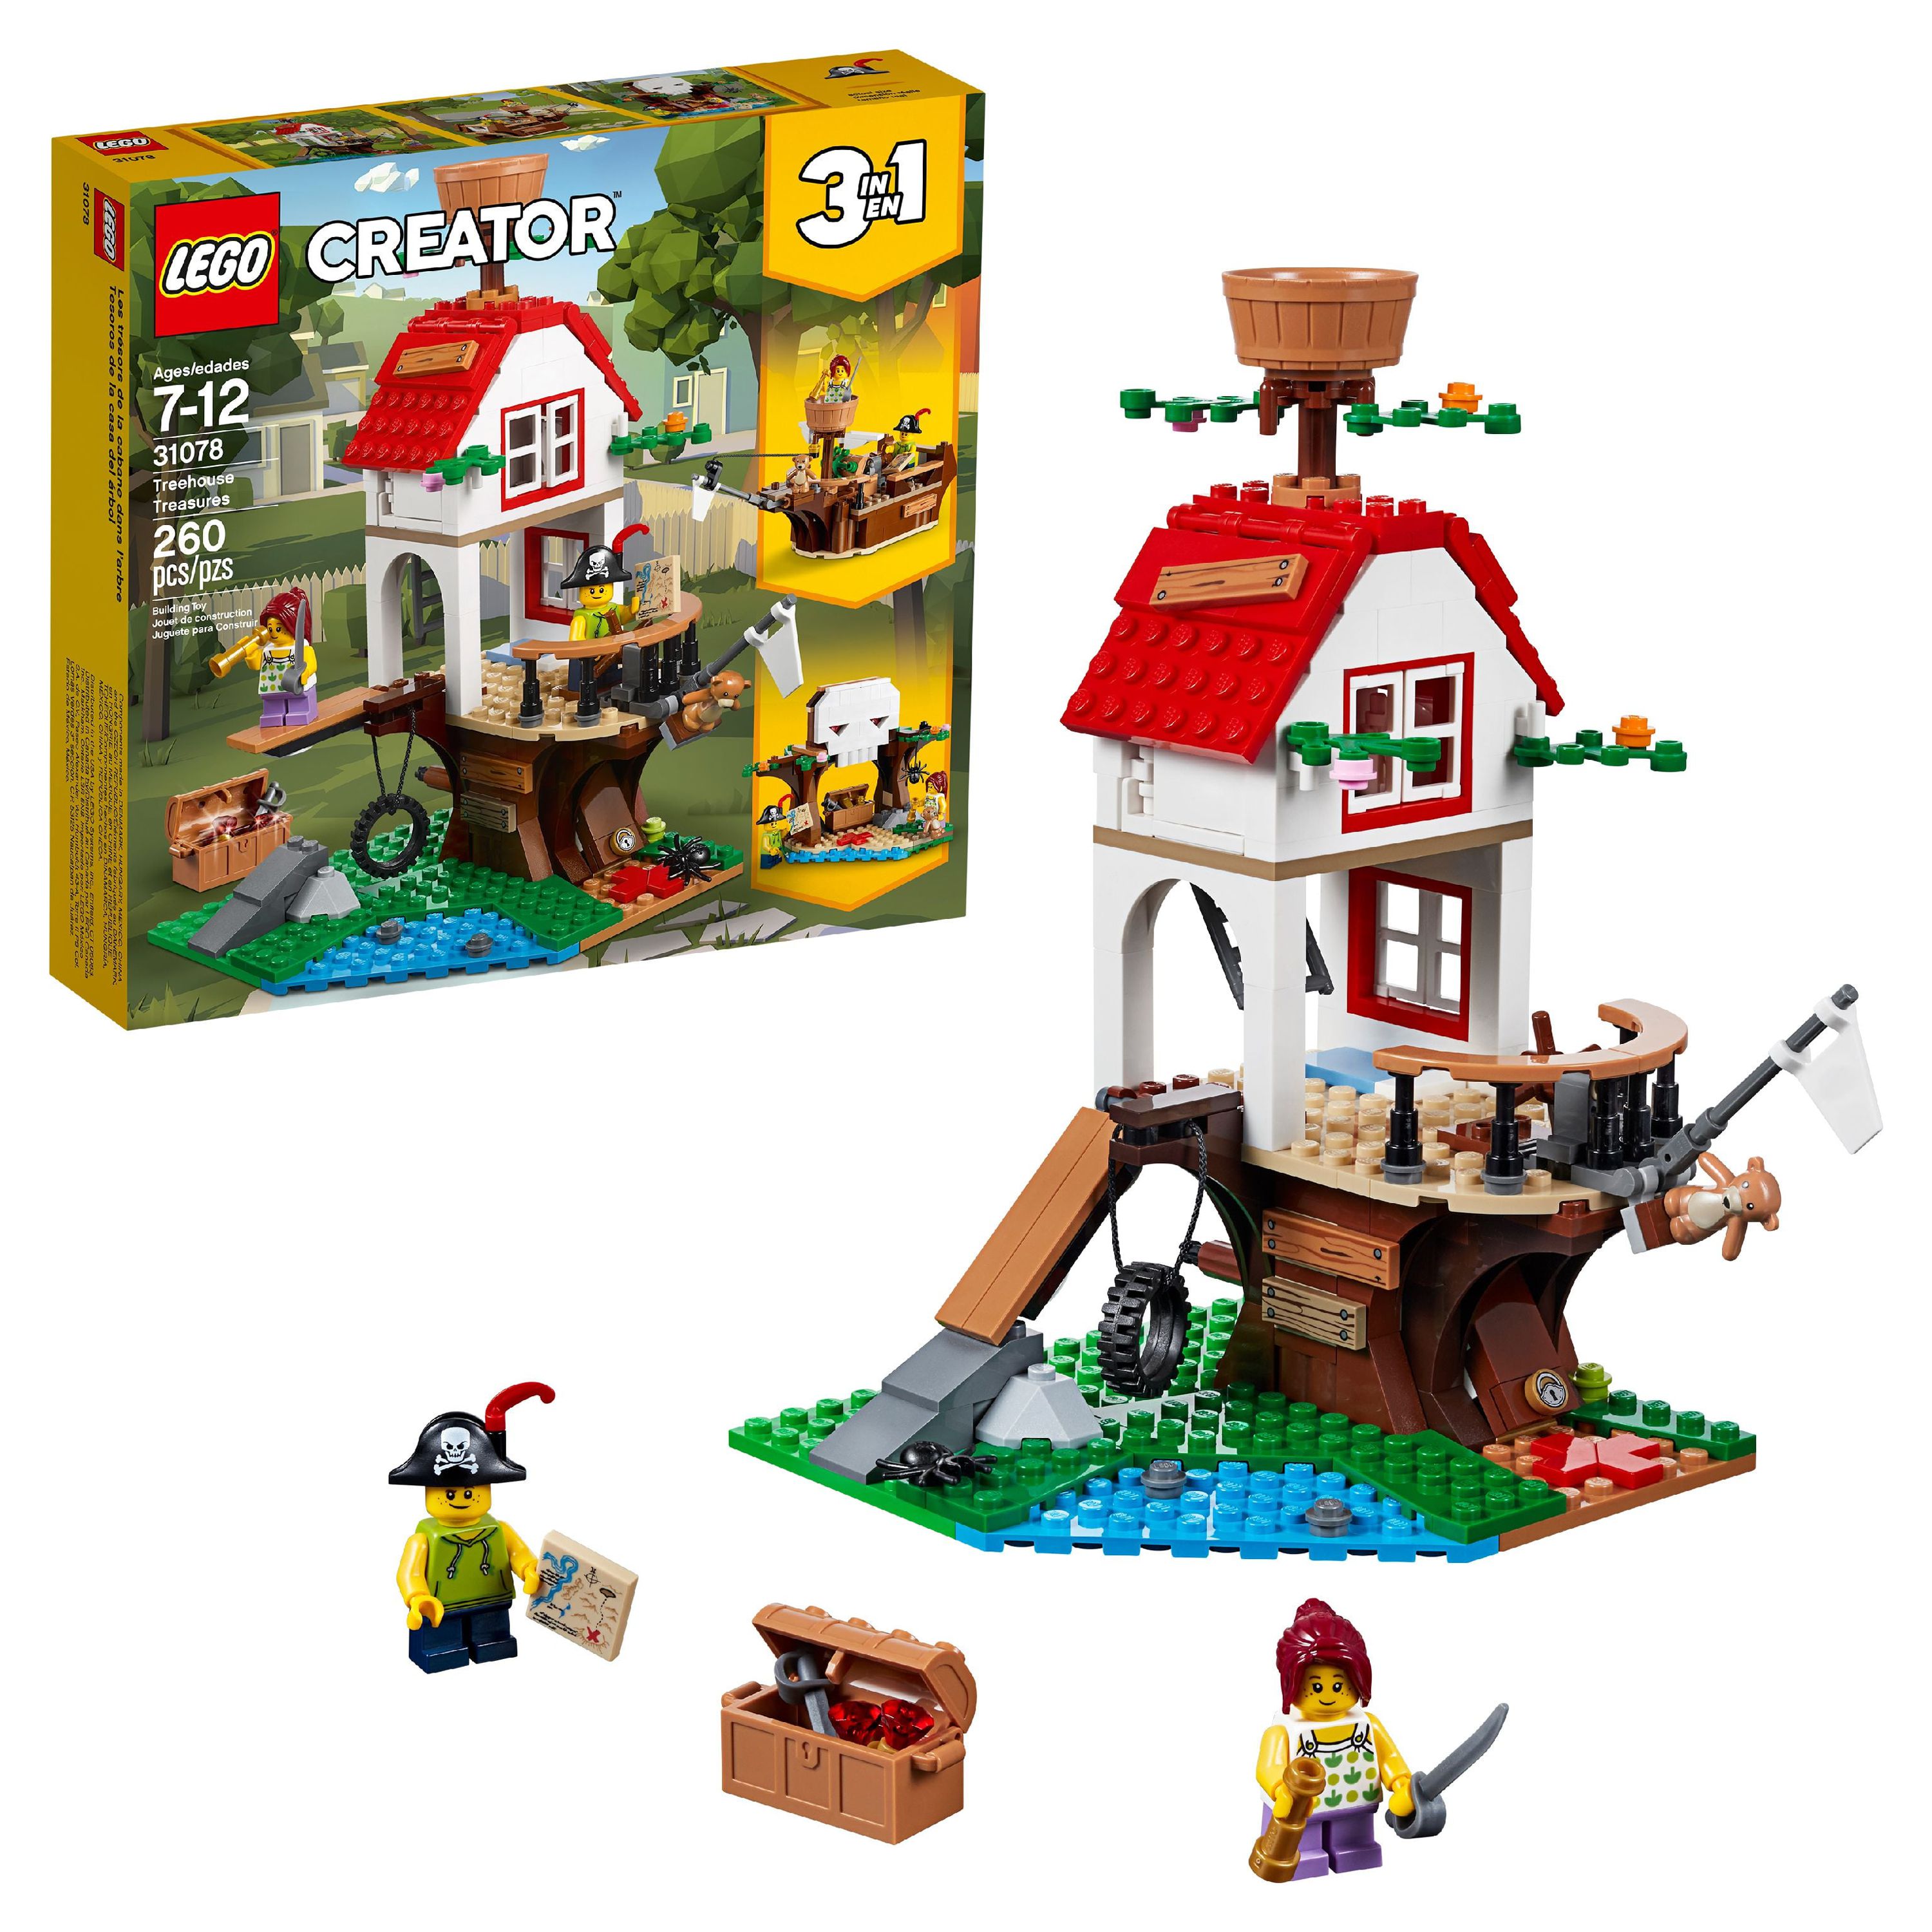 LEGO Creator Treehouse Treasures 31078 - image 1 of 7